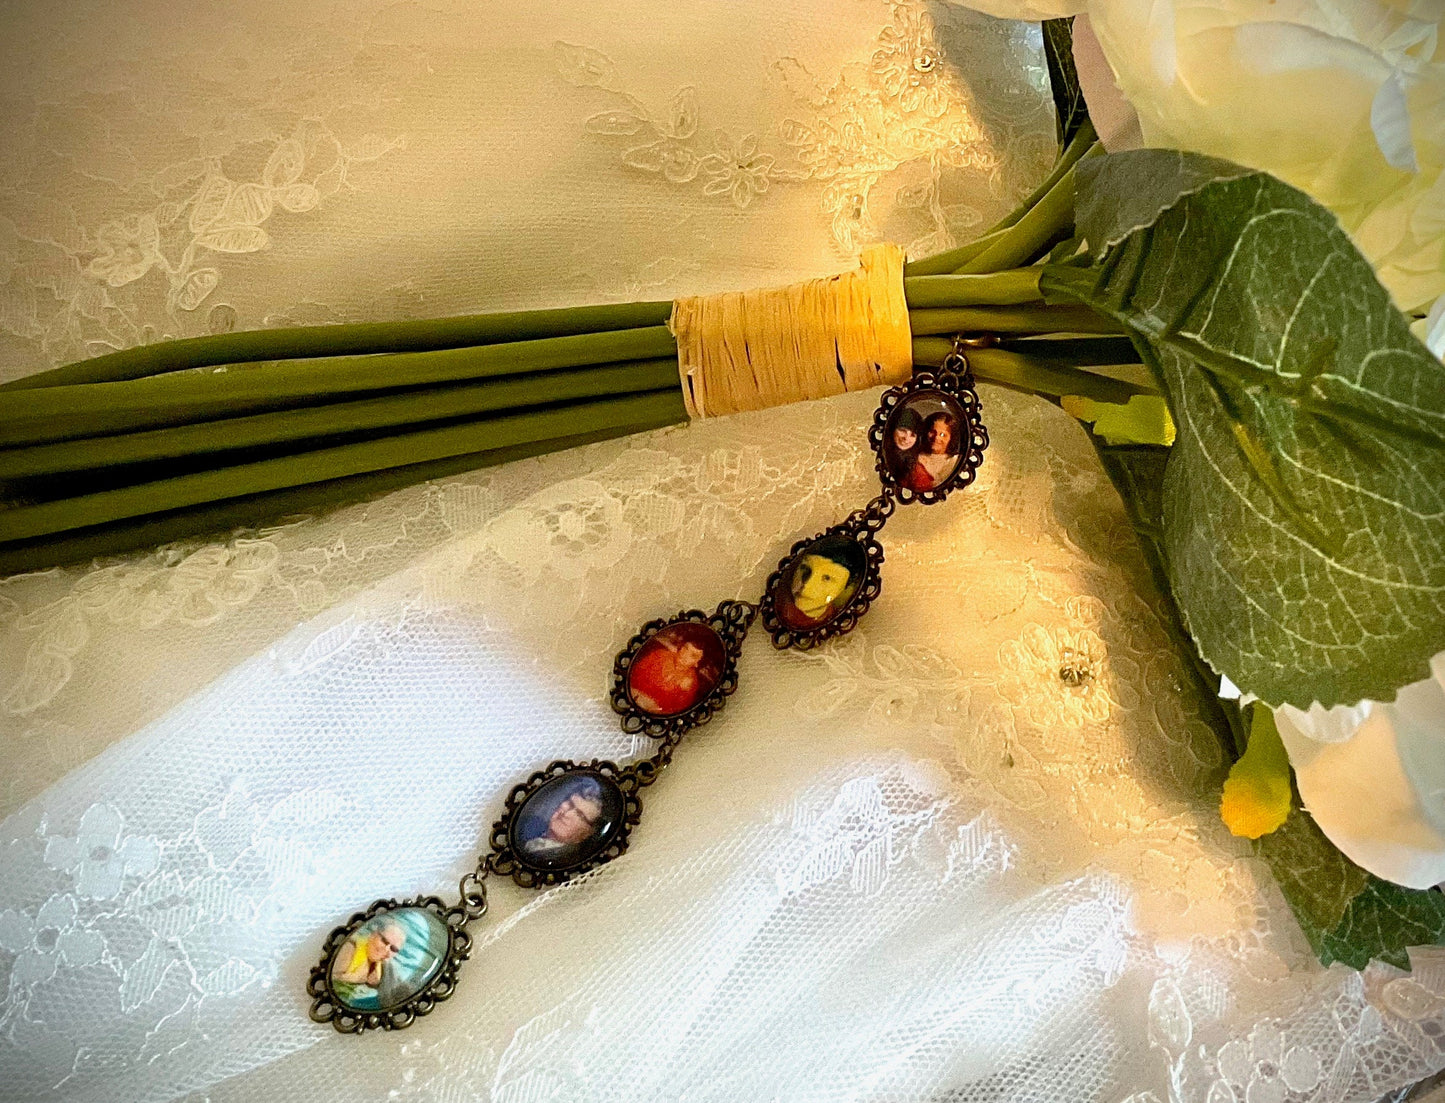 Bouquet Memorial Photo Charm Chain, Custom Bouquet Charm, Wedding Memo –  Something Sally Co.